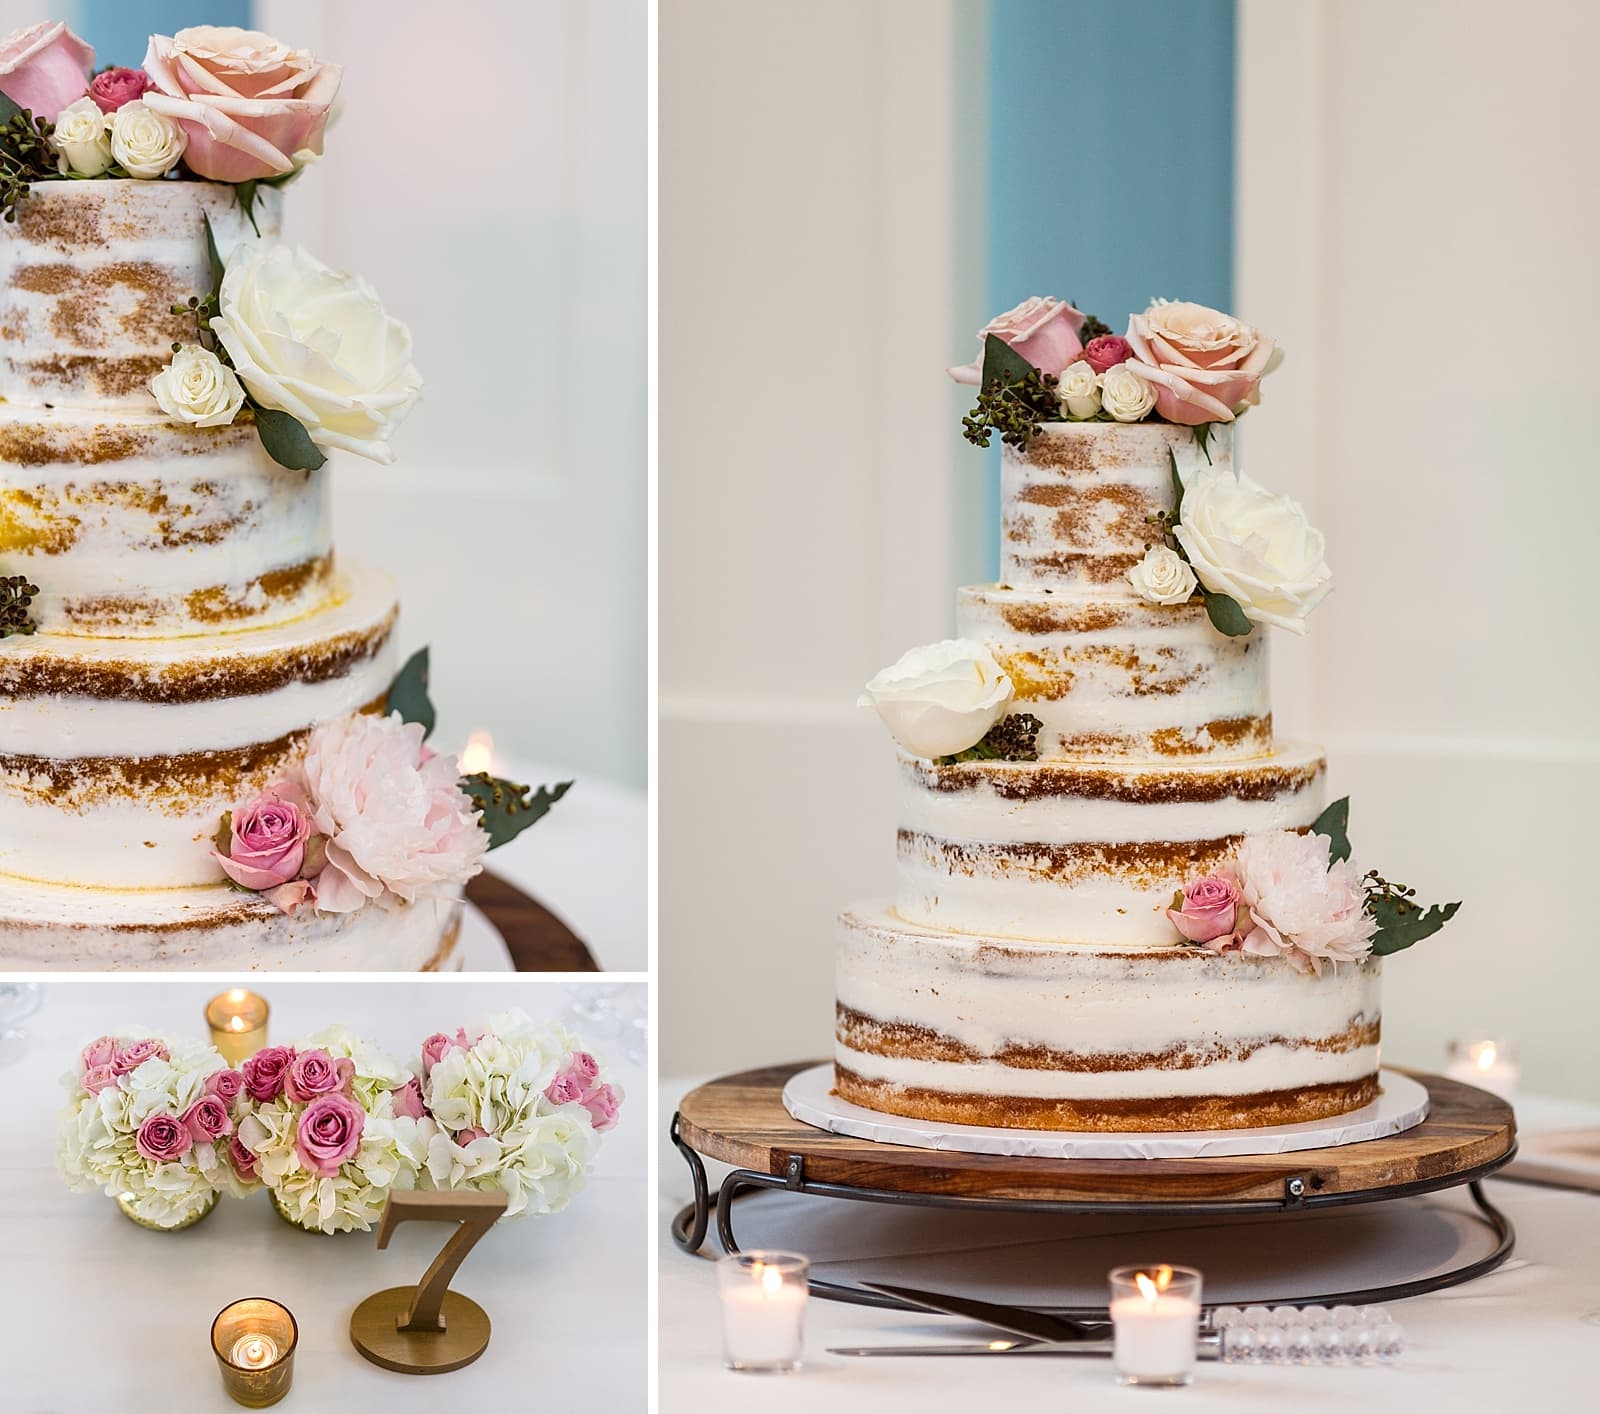 Wedding cake, unique wedding cake, floral wedding cake, wedding table details